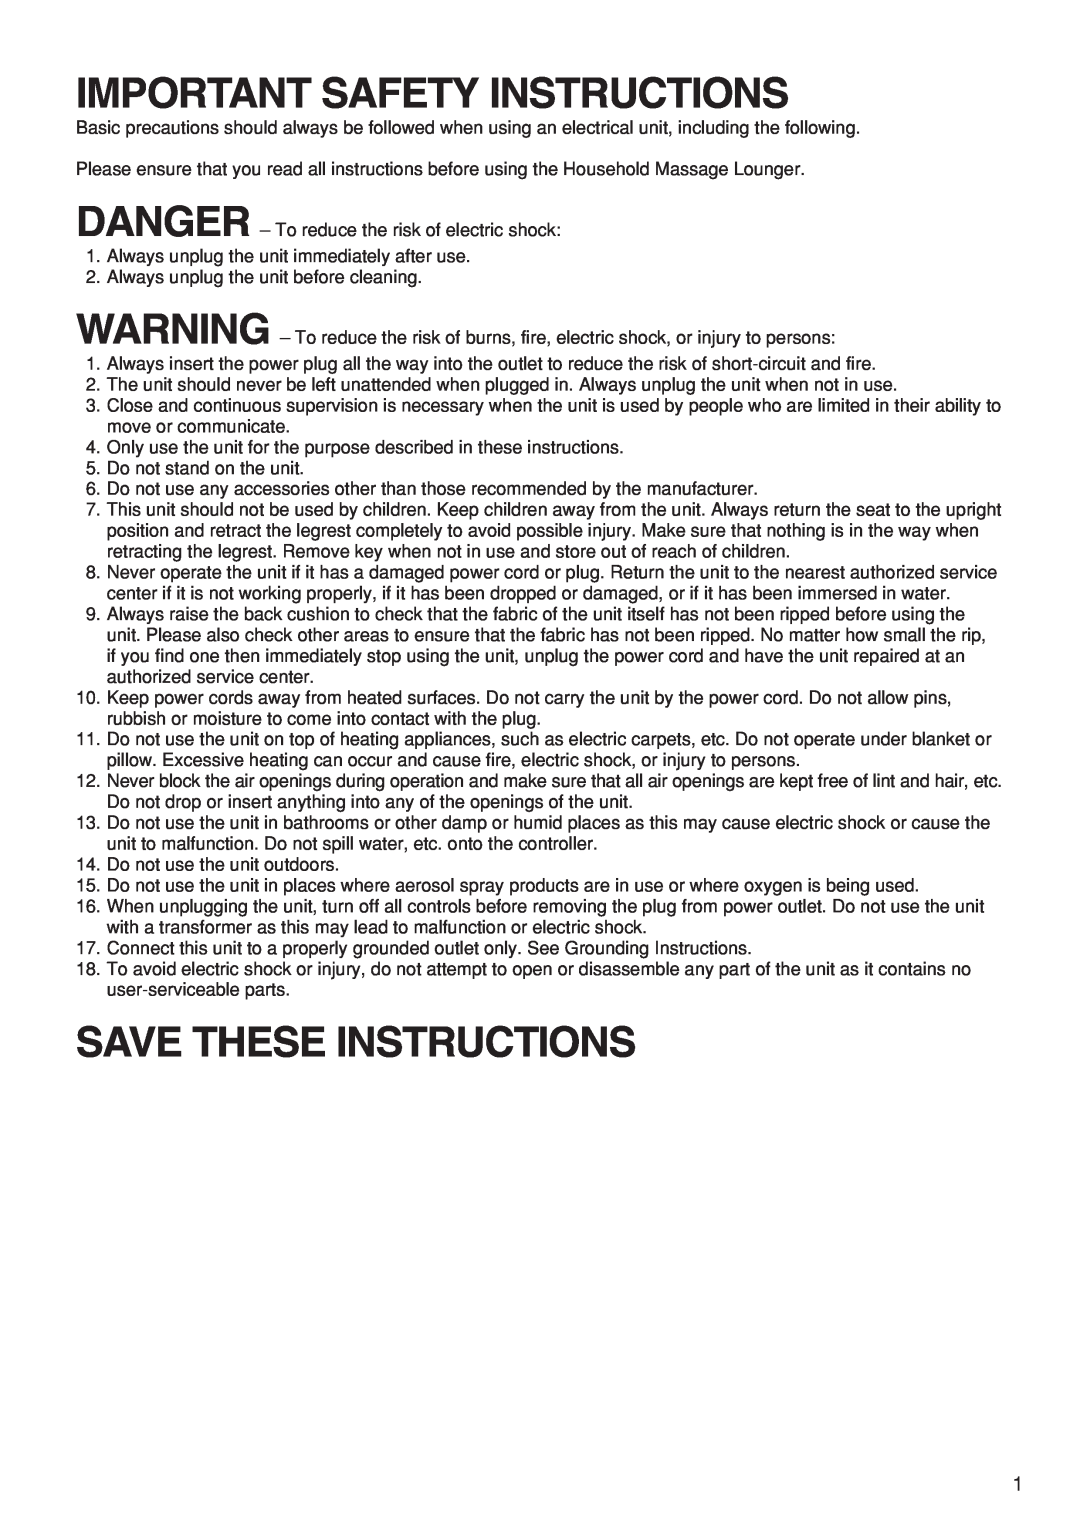 Panasonic EP1273 operating instructions Important Safety Instructions, Save These Instructions 